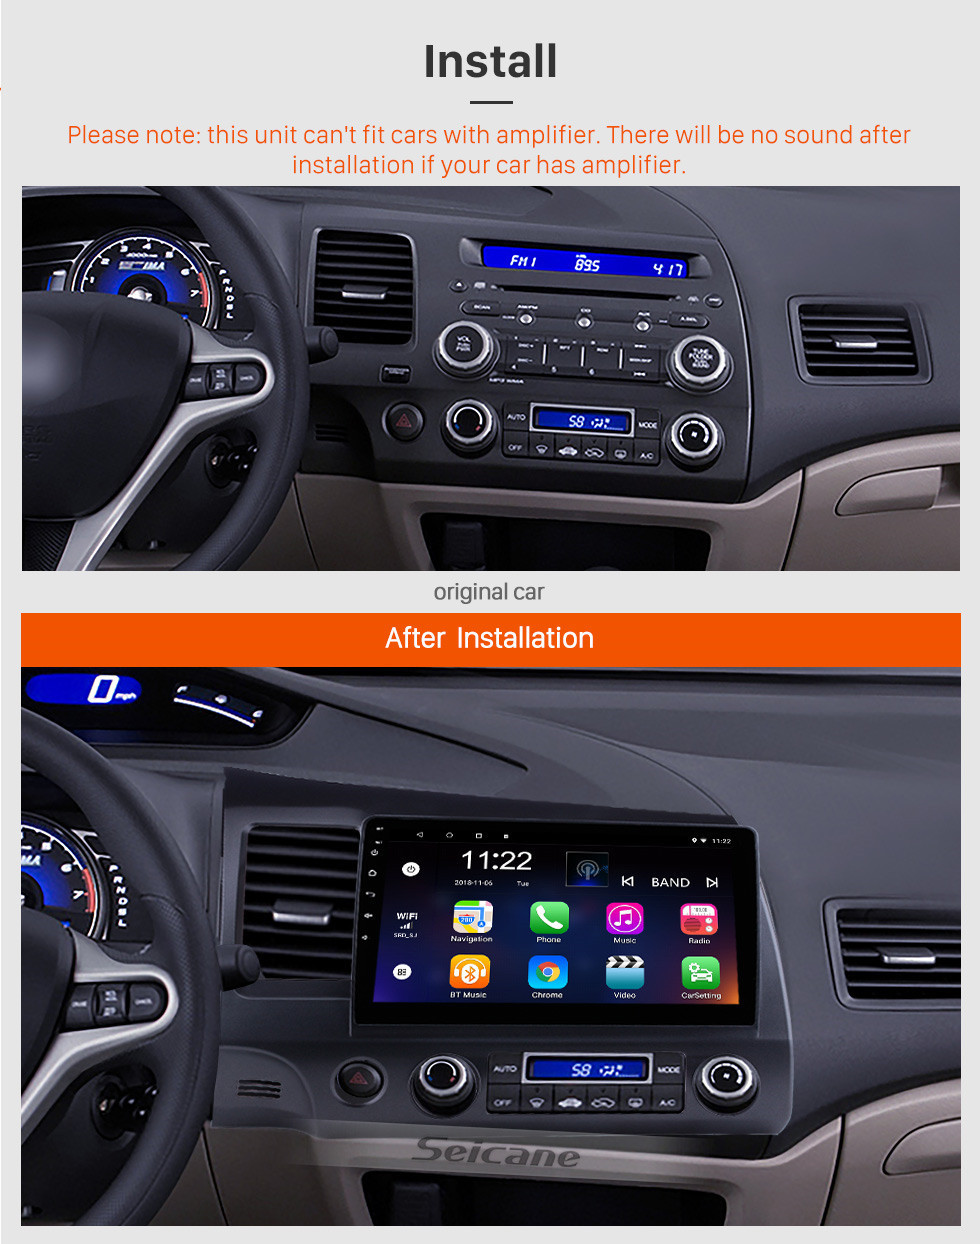 10.1''Android 8.1 Car Radio For 2006-2011 Honda Civic GPS Head Unit Bluetooth